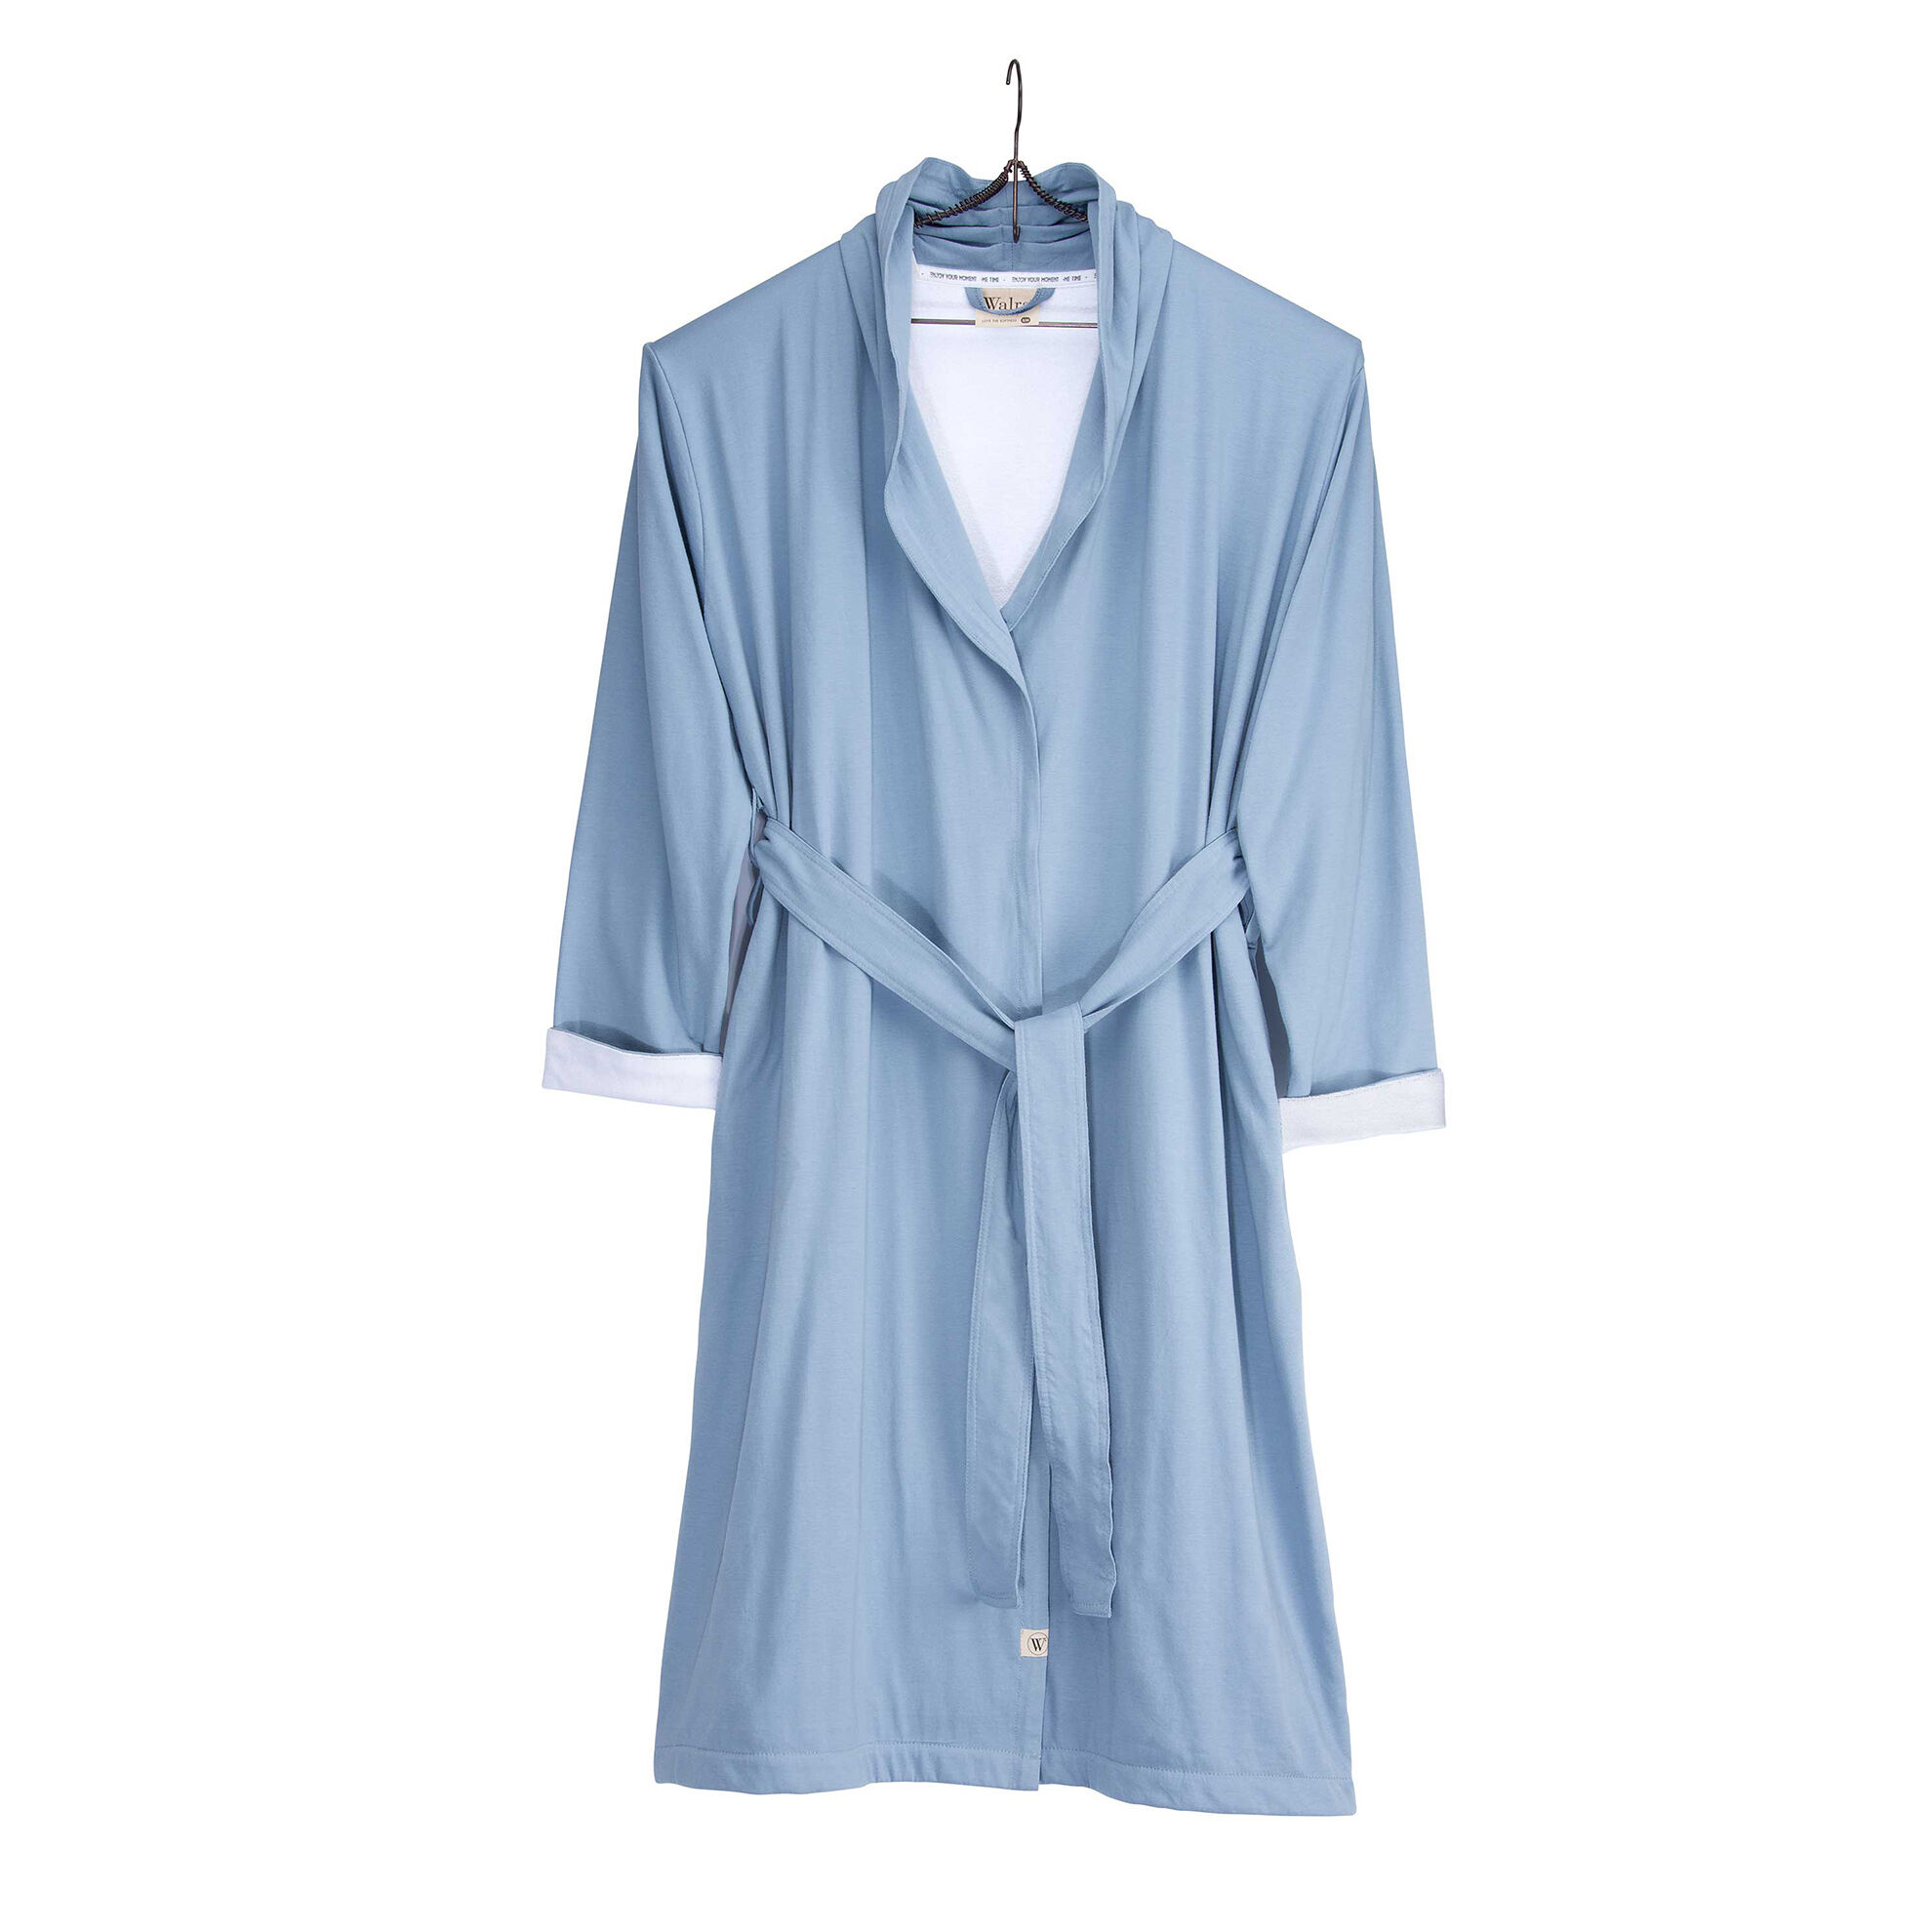 Walra badjas Jersey Robe - Blauw/wit - L/XL